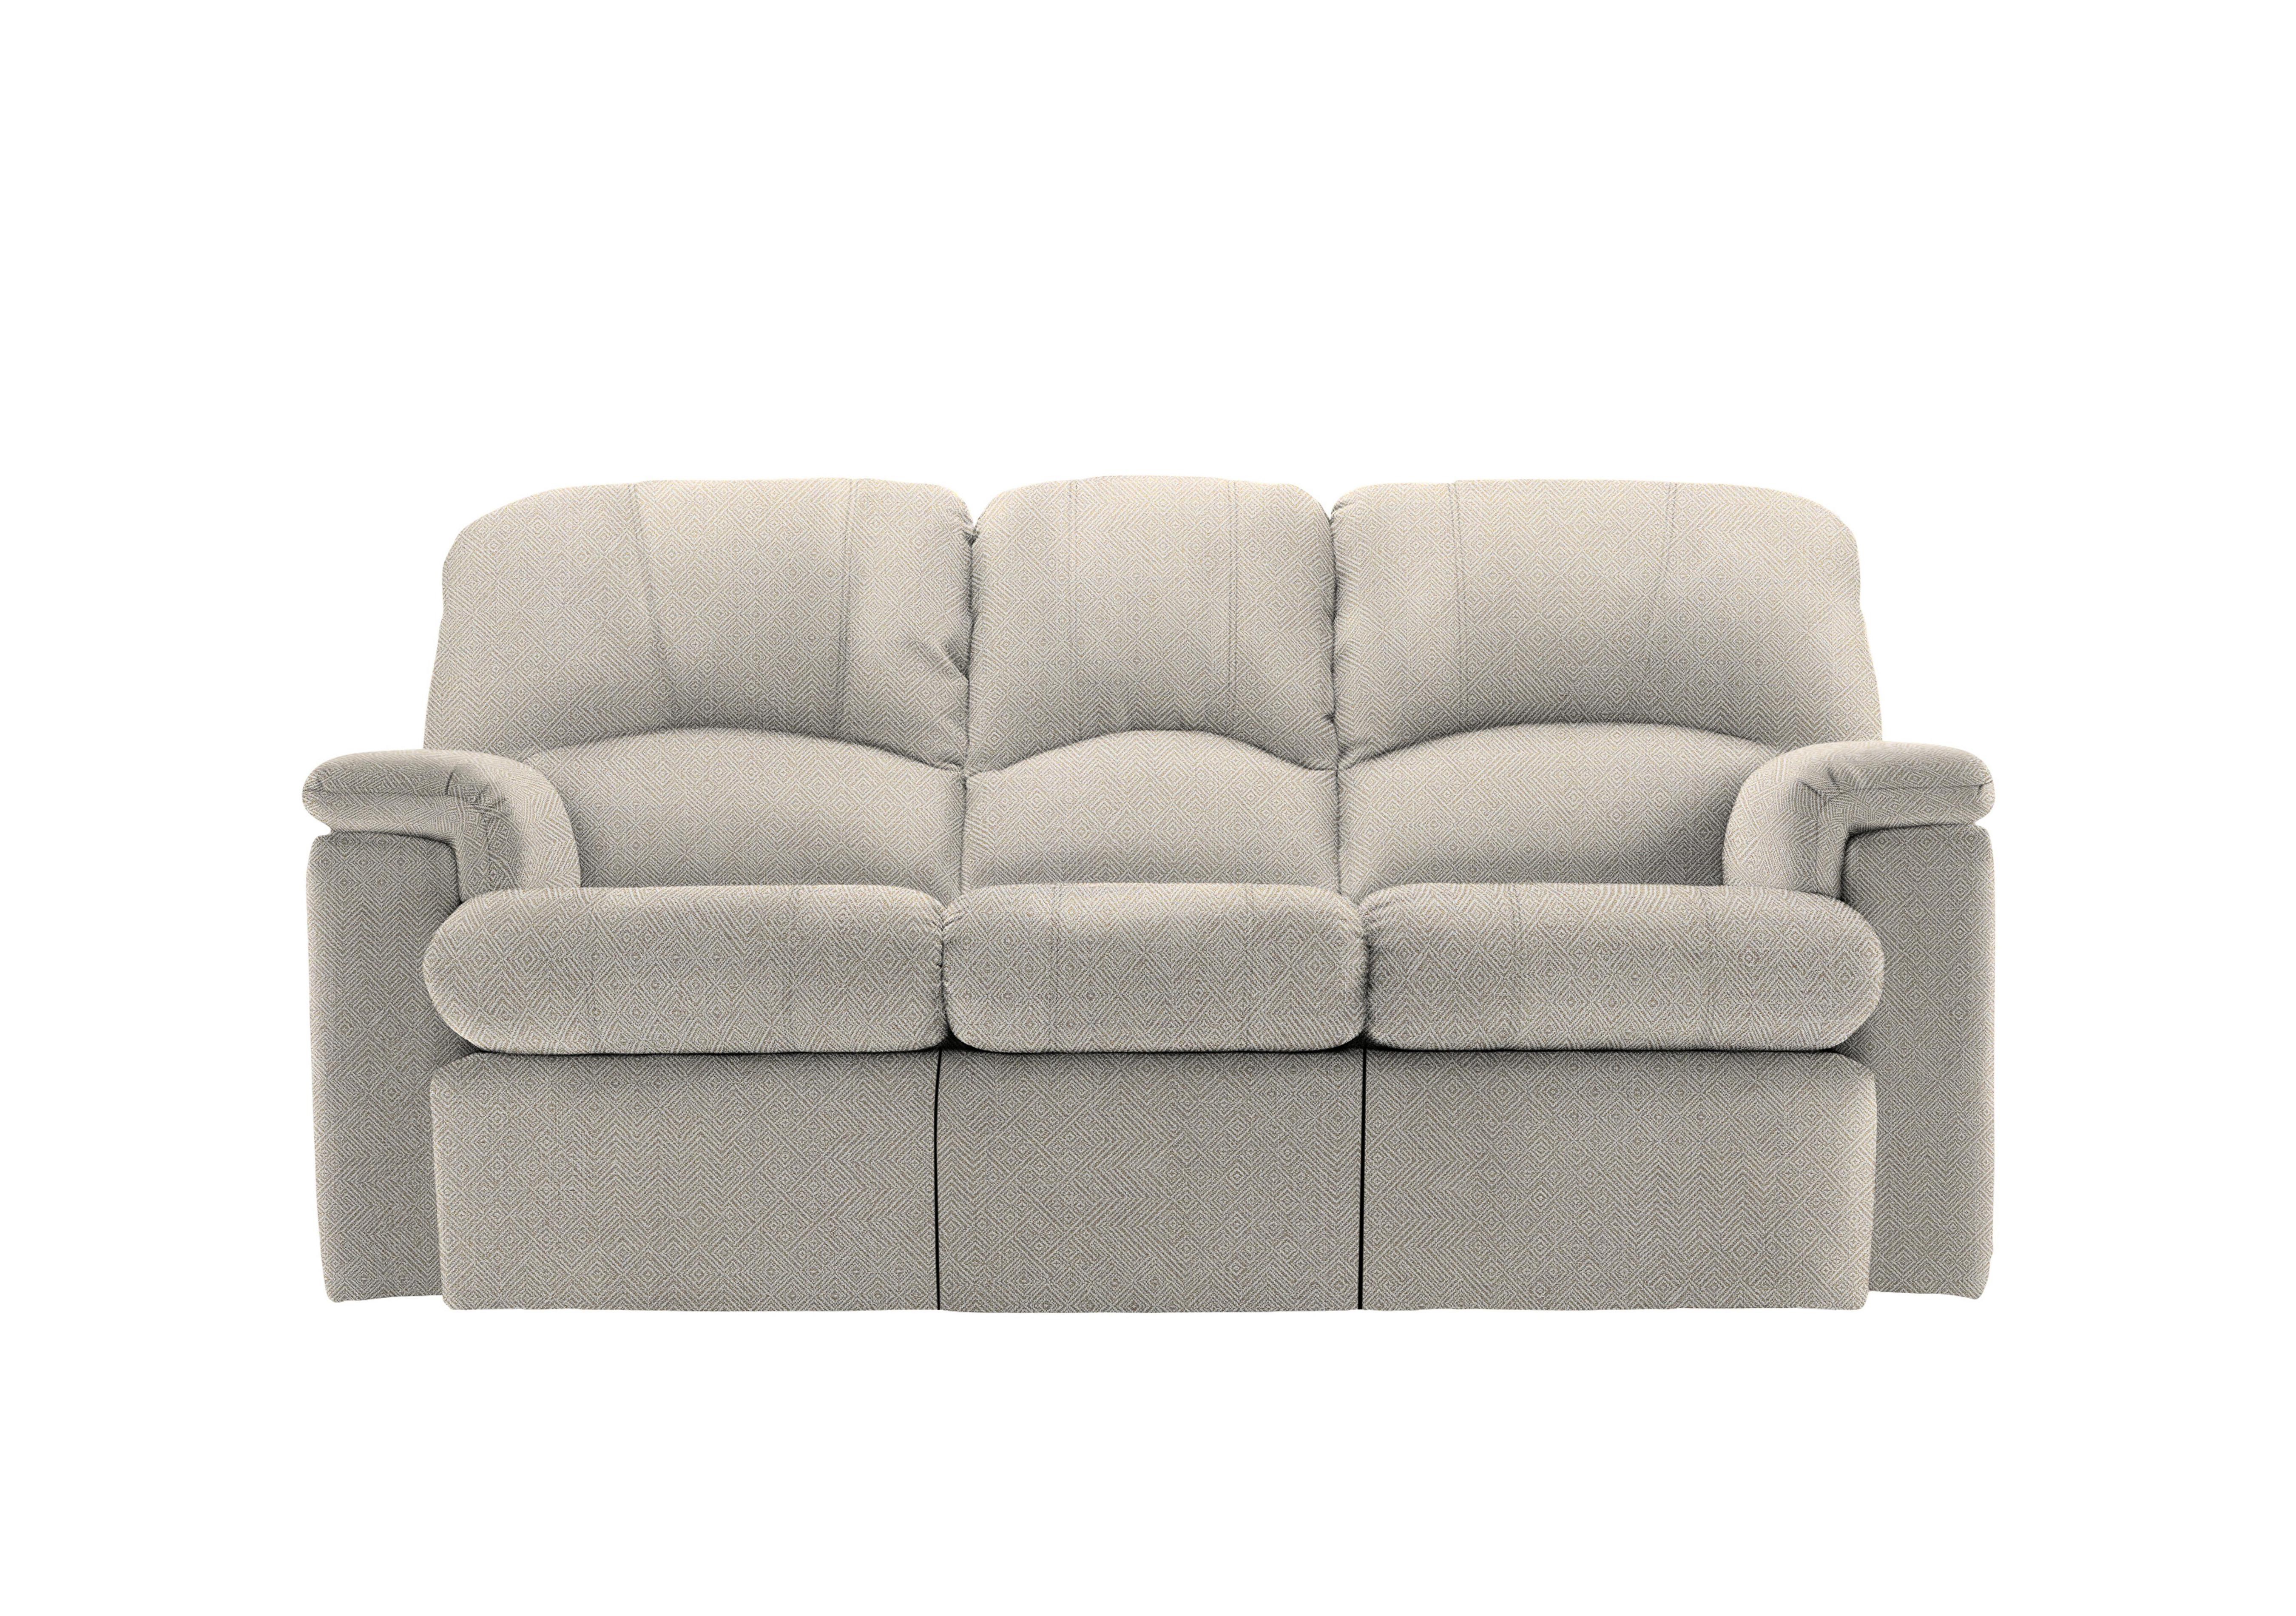 Chloe 3 Seater Fabric Sofa in B011 Nebular Blush on Furniture Village